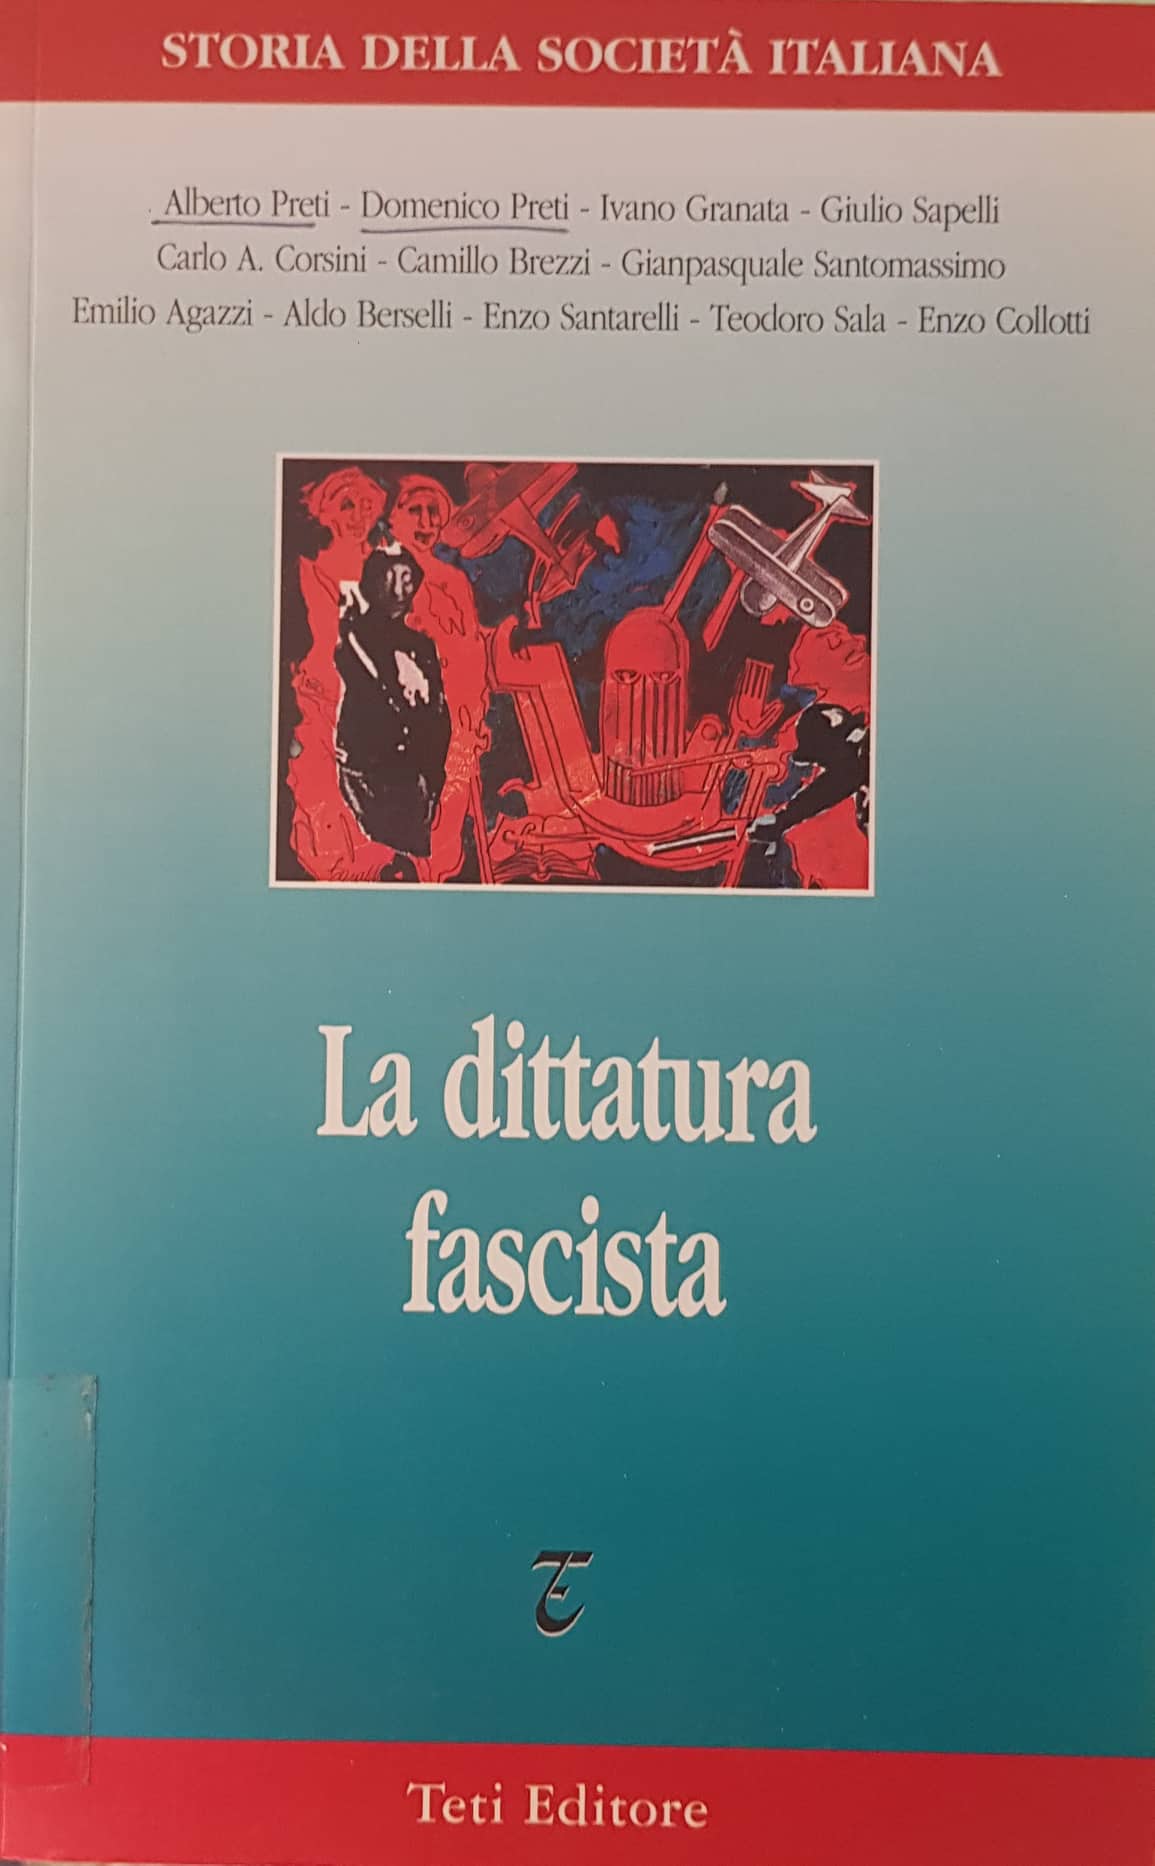 Copertina di La dittatura fascista